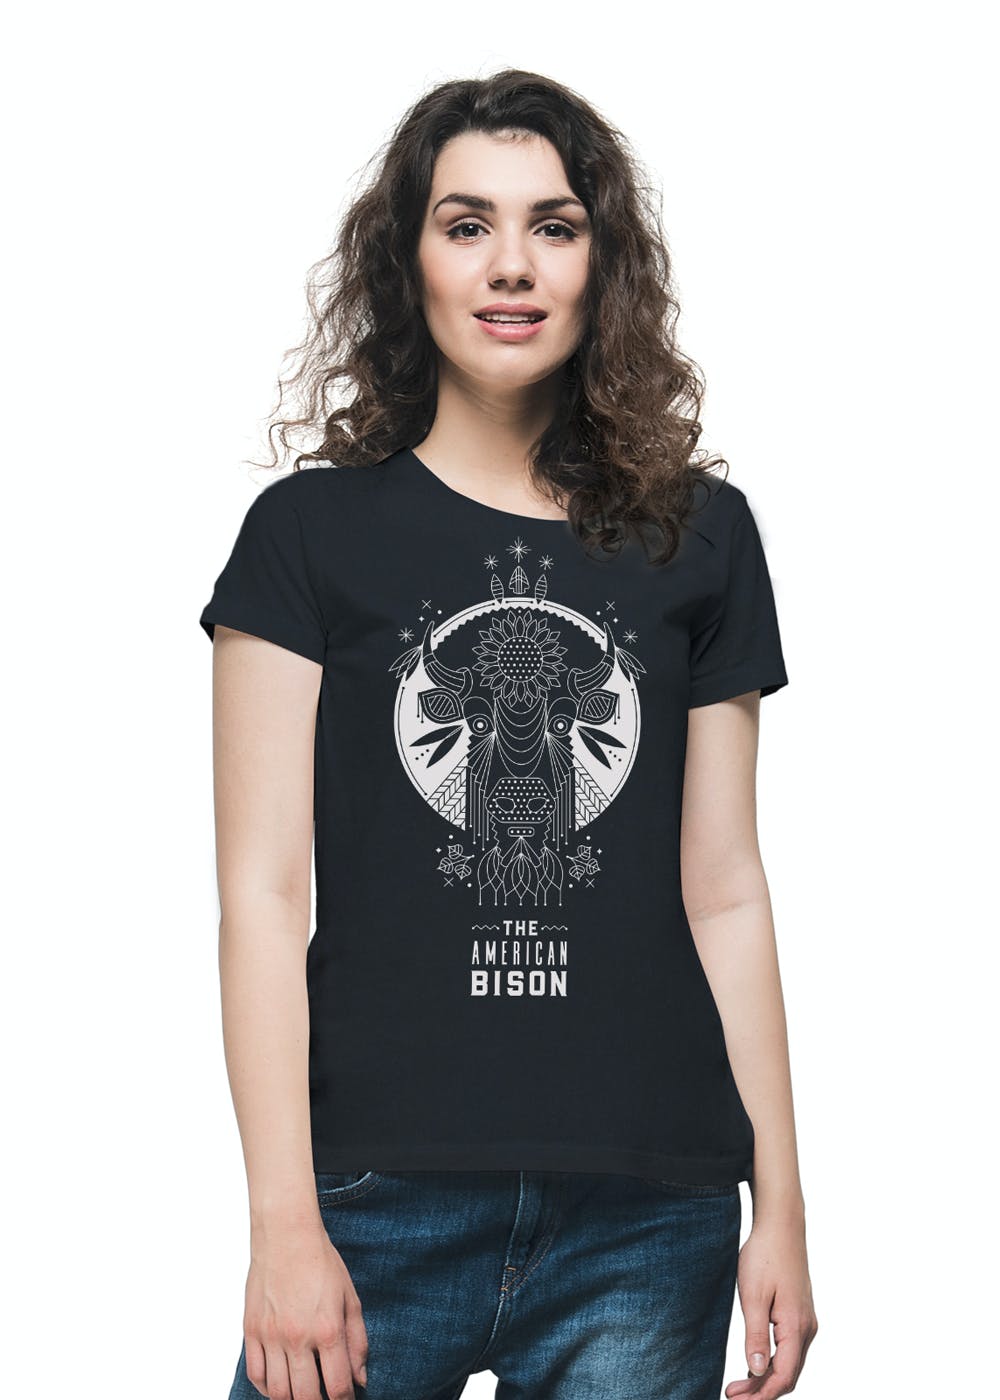 Get American Bison Graphic Black T-Shirt at ₹ 899 | LBB Shop